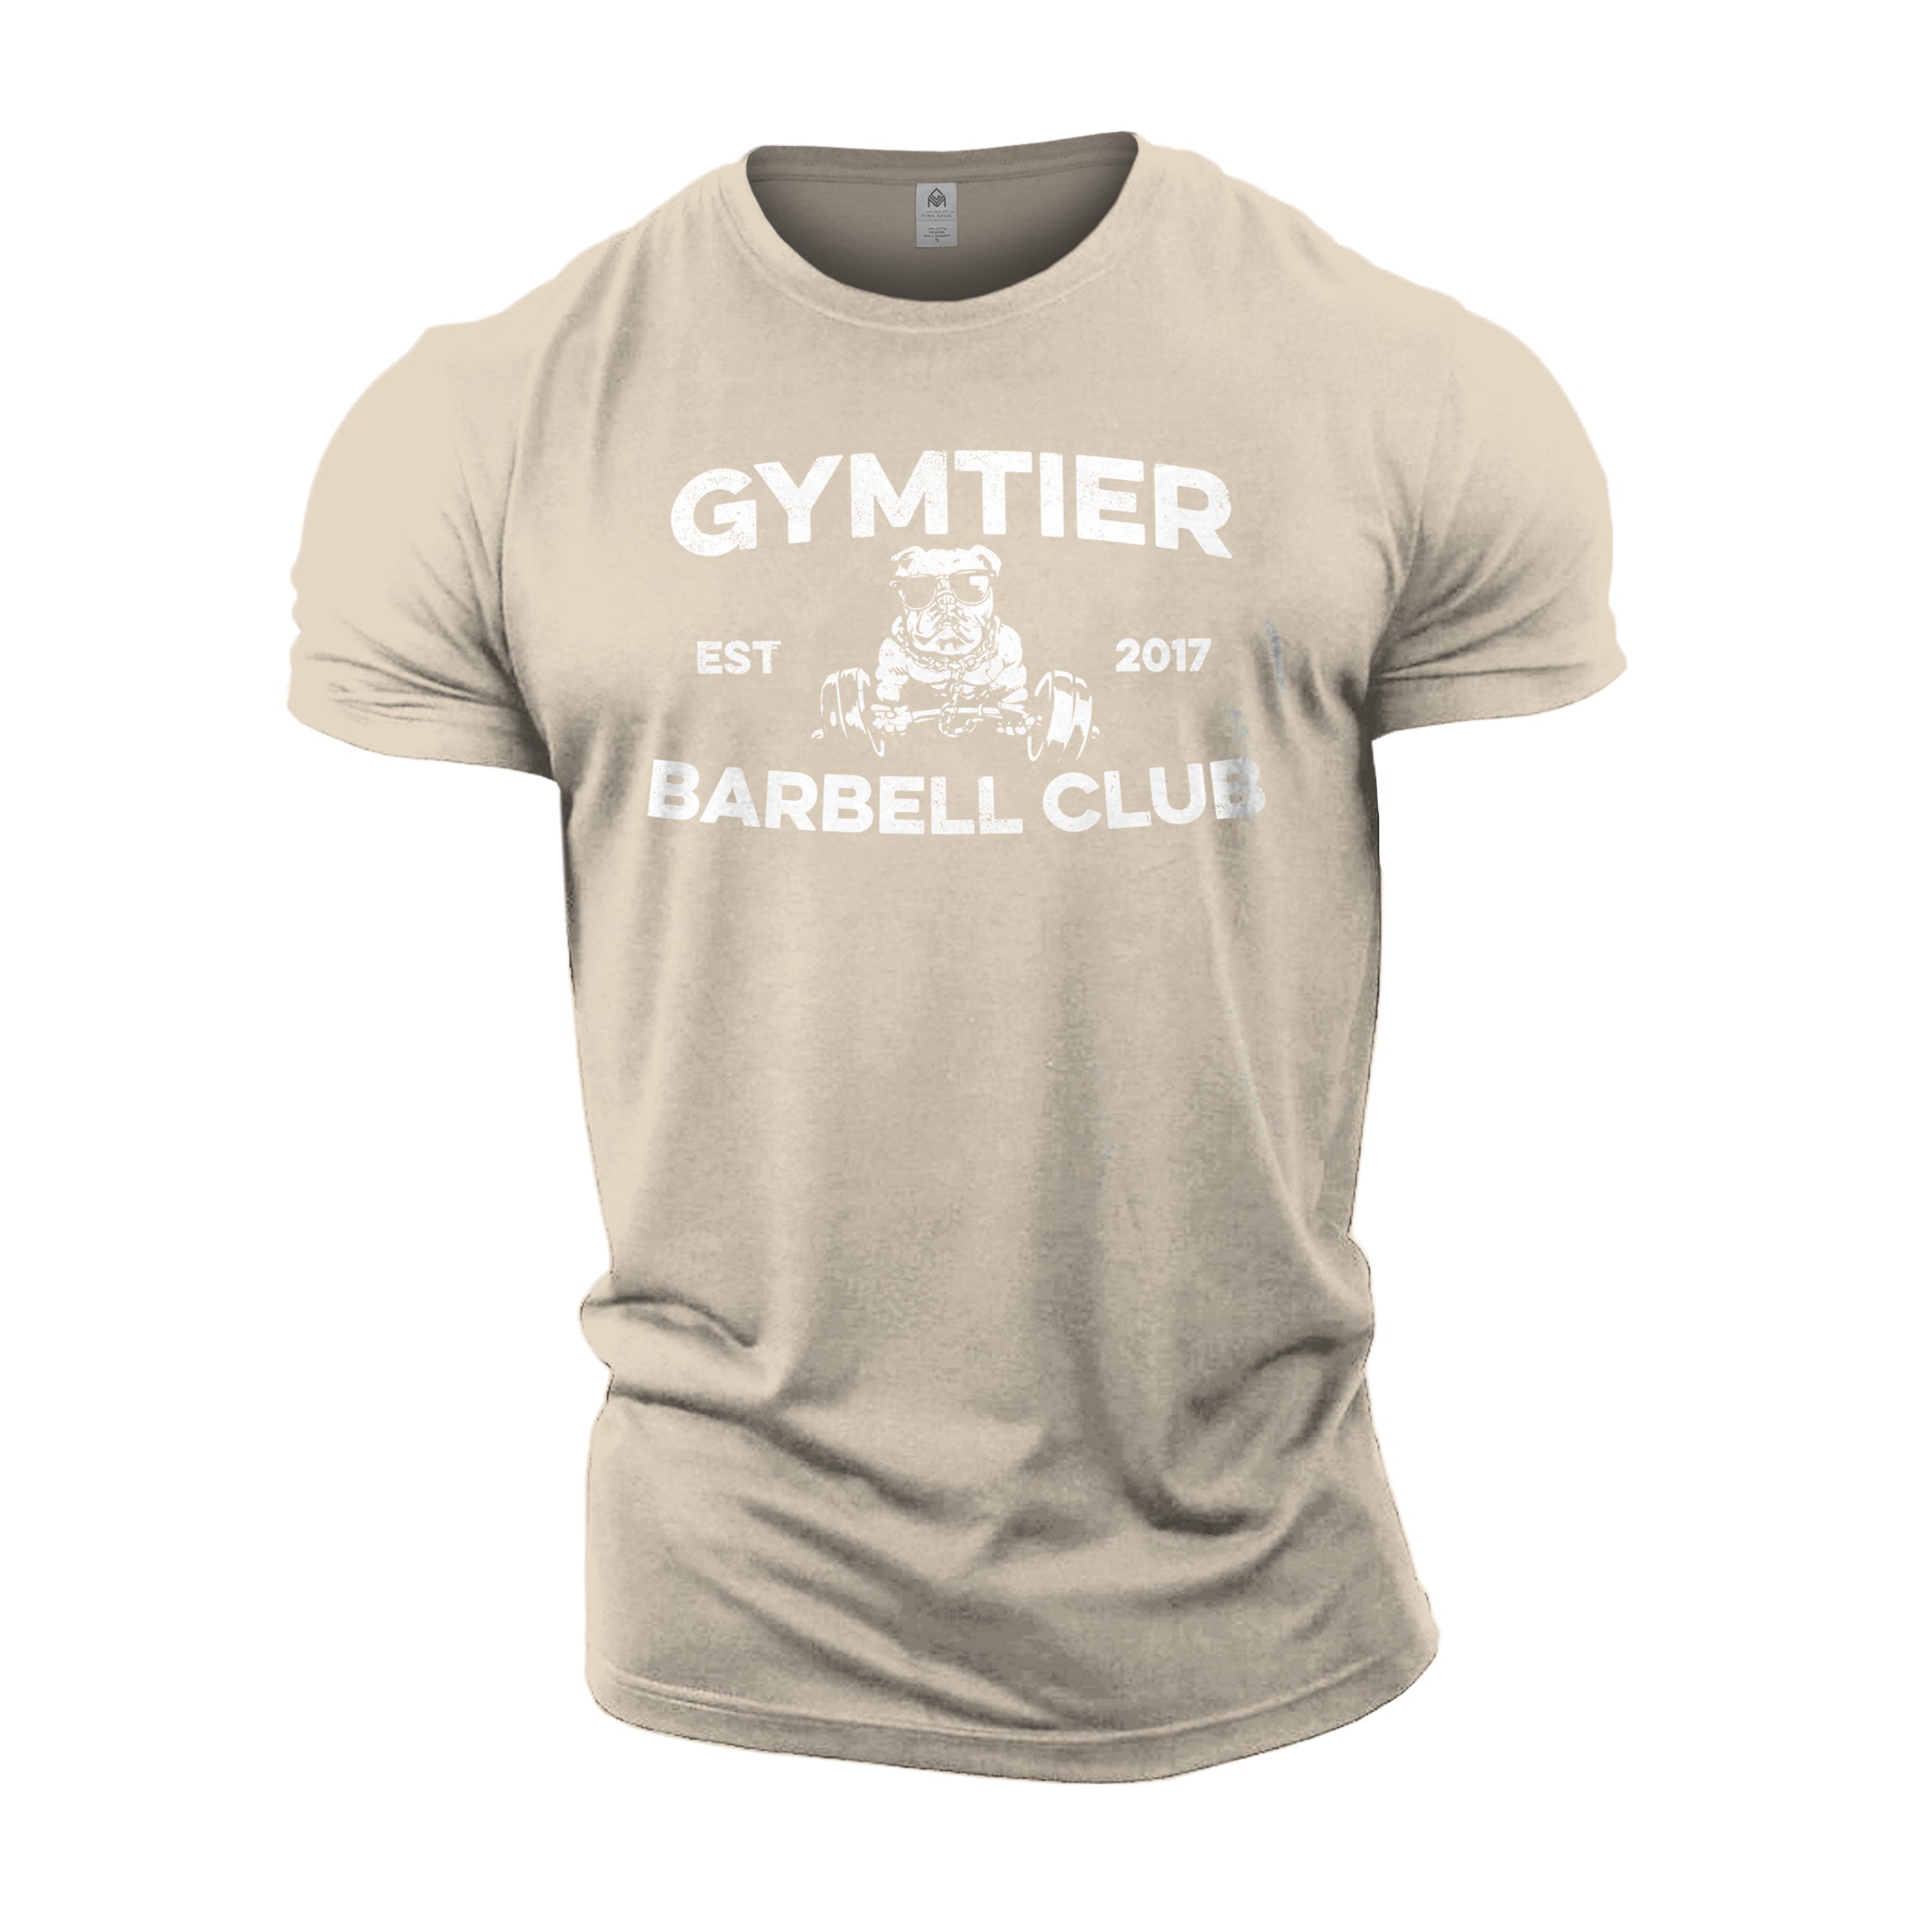 Gymtier Barbell Club - Pitbull - Gym T-Shirt